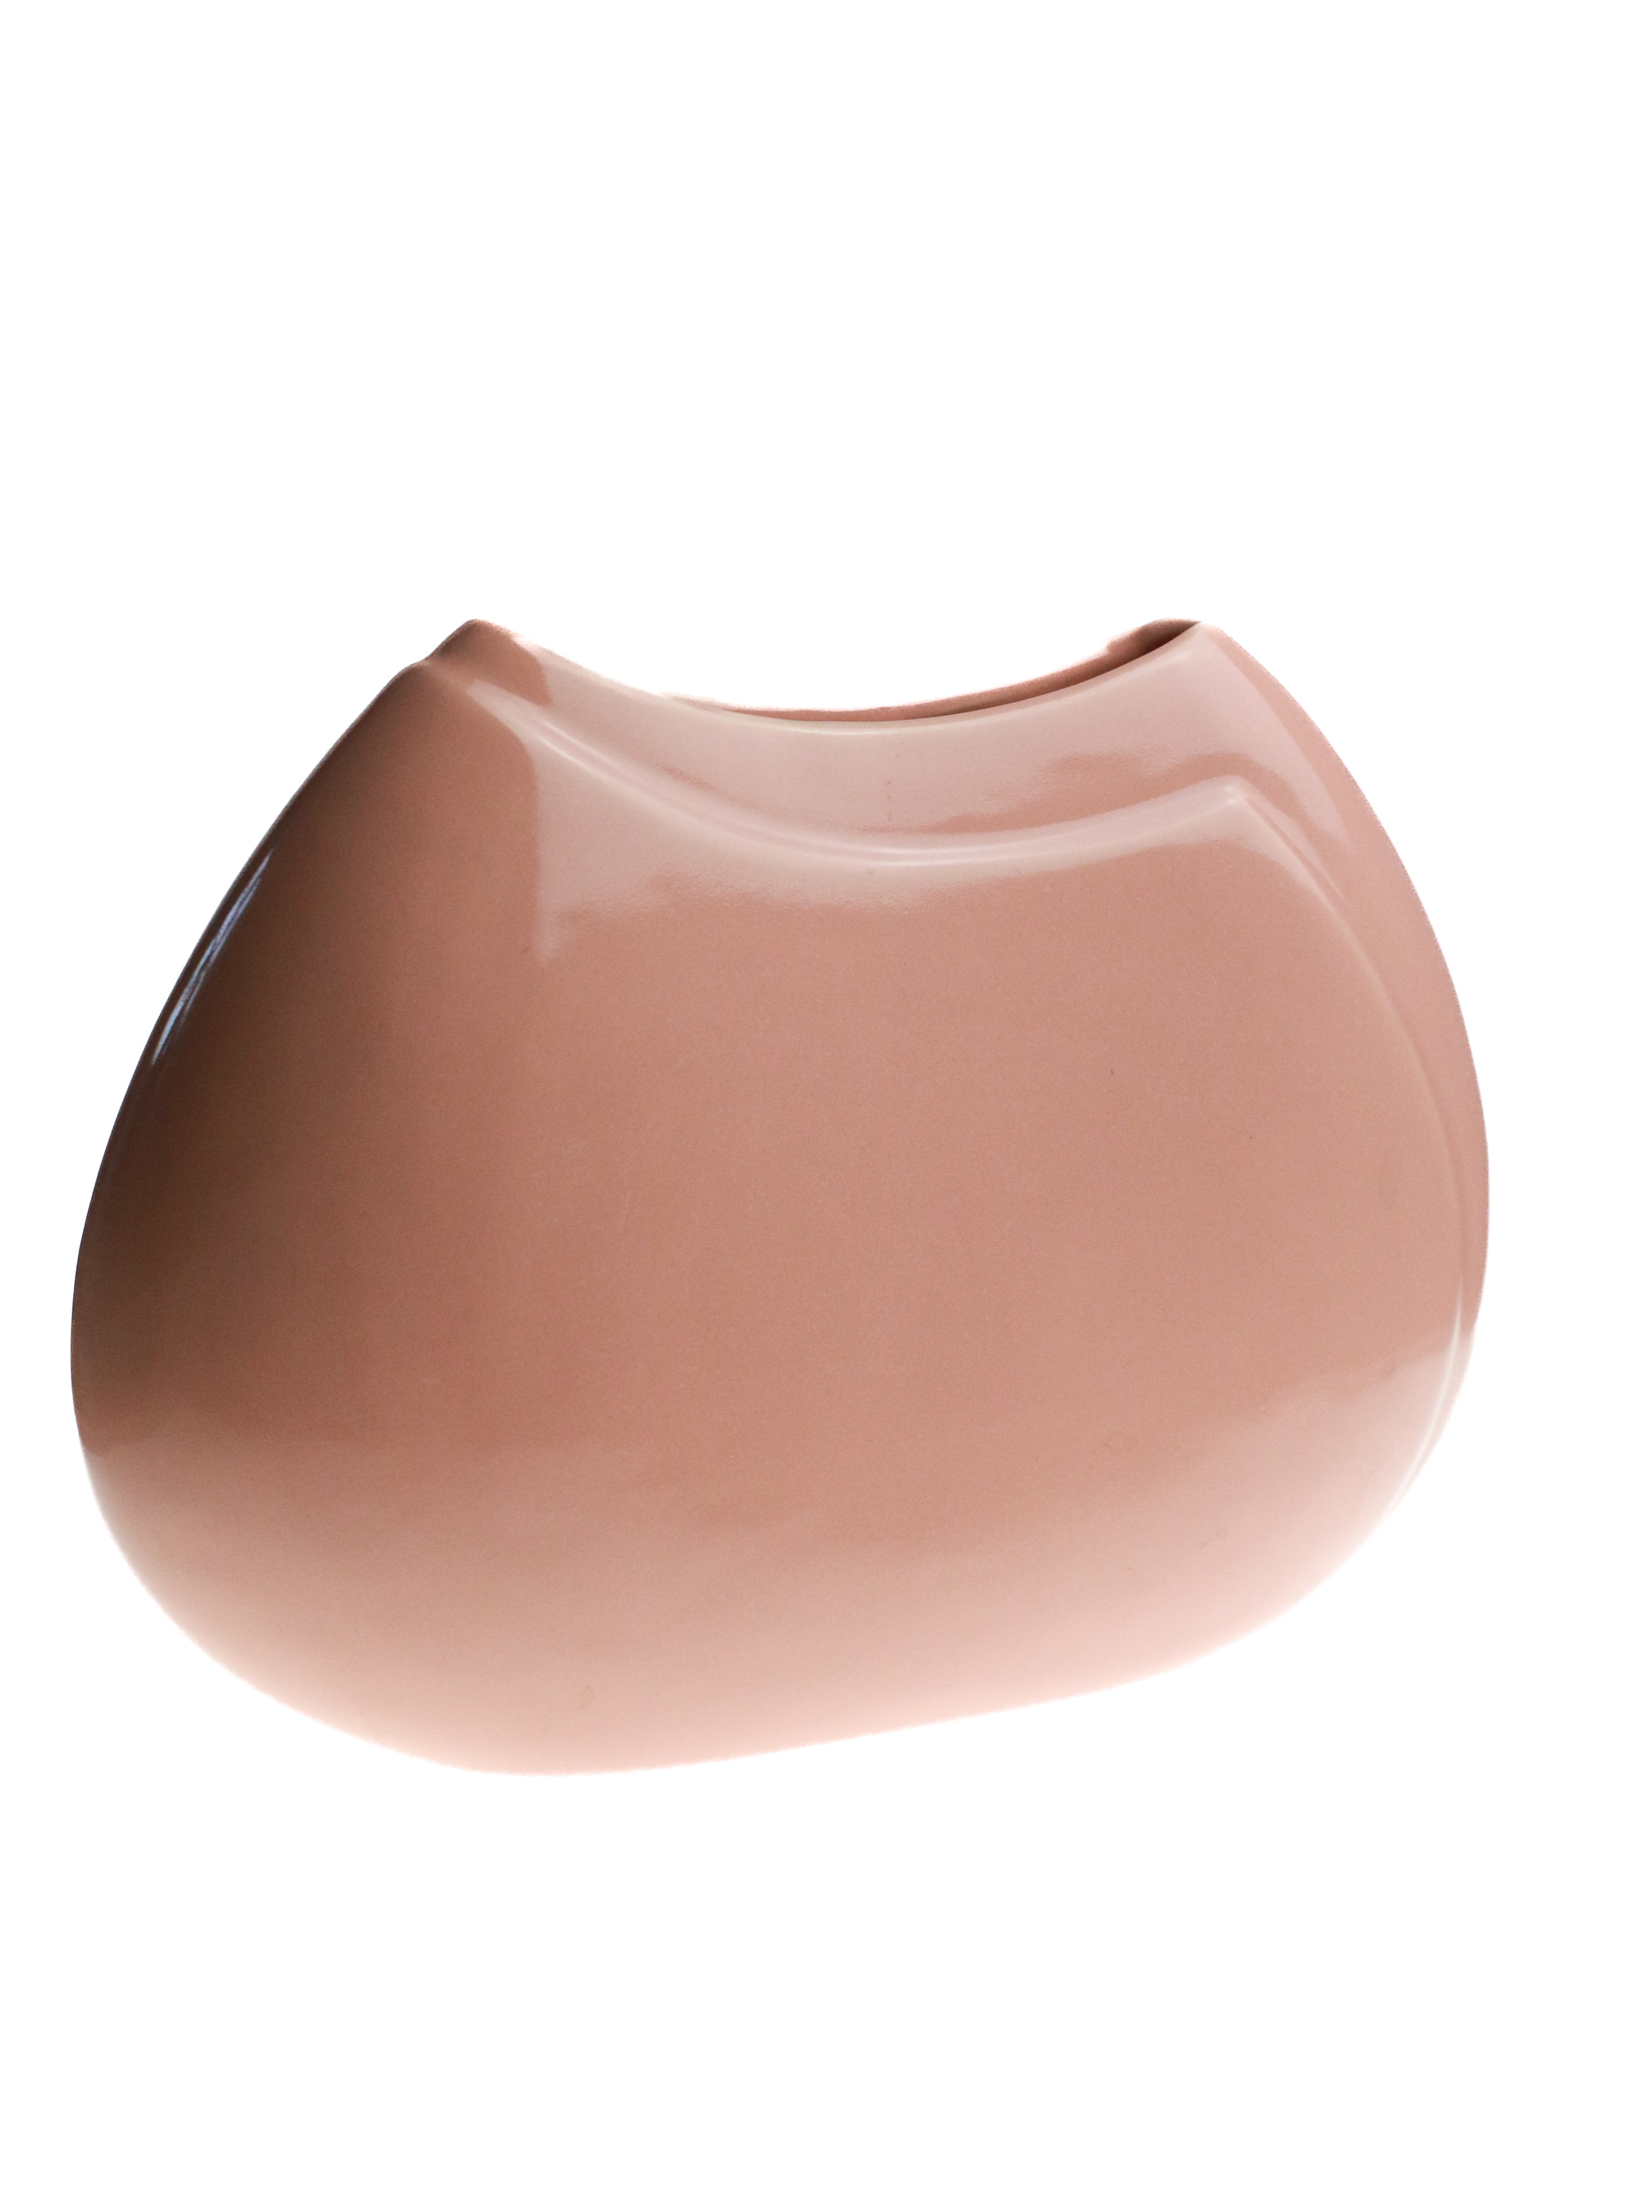 80’s Pink Flat Vase